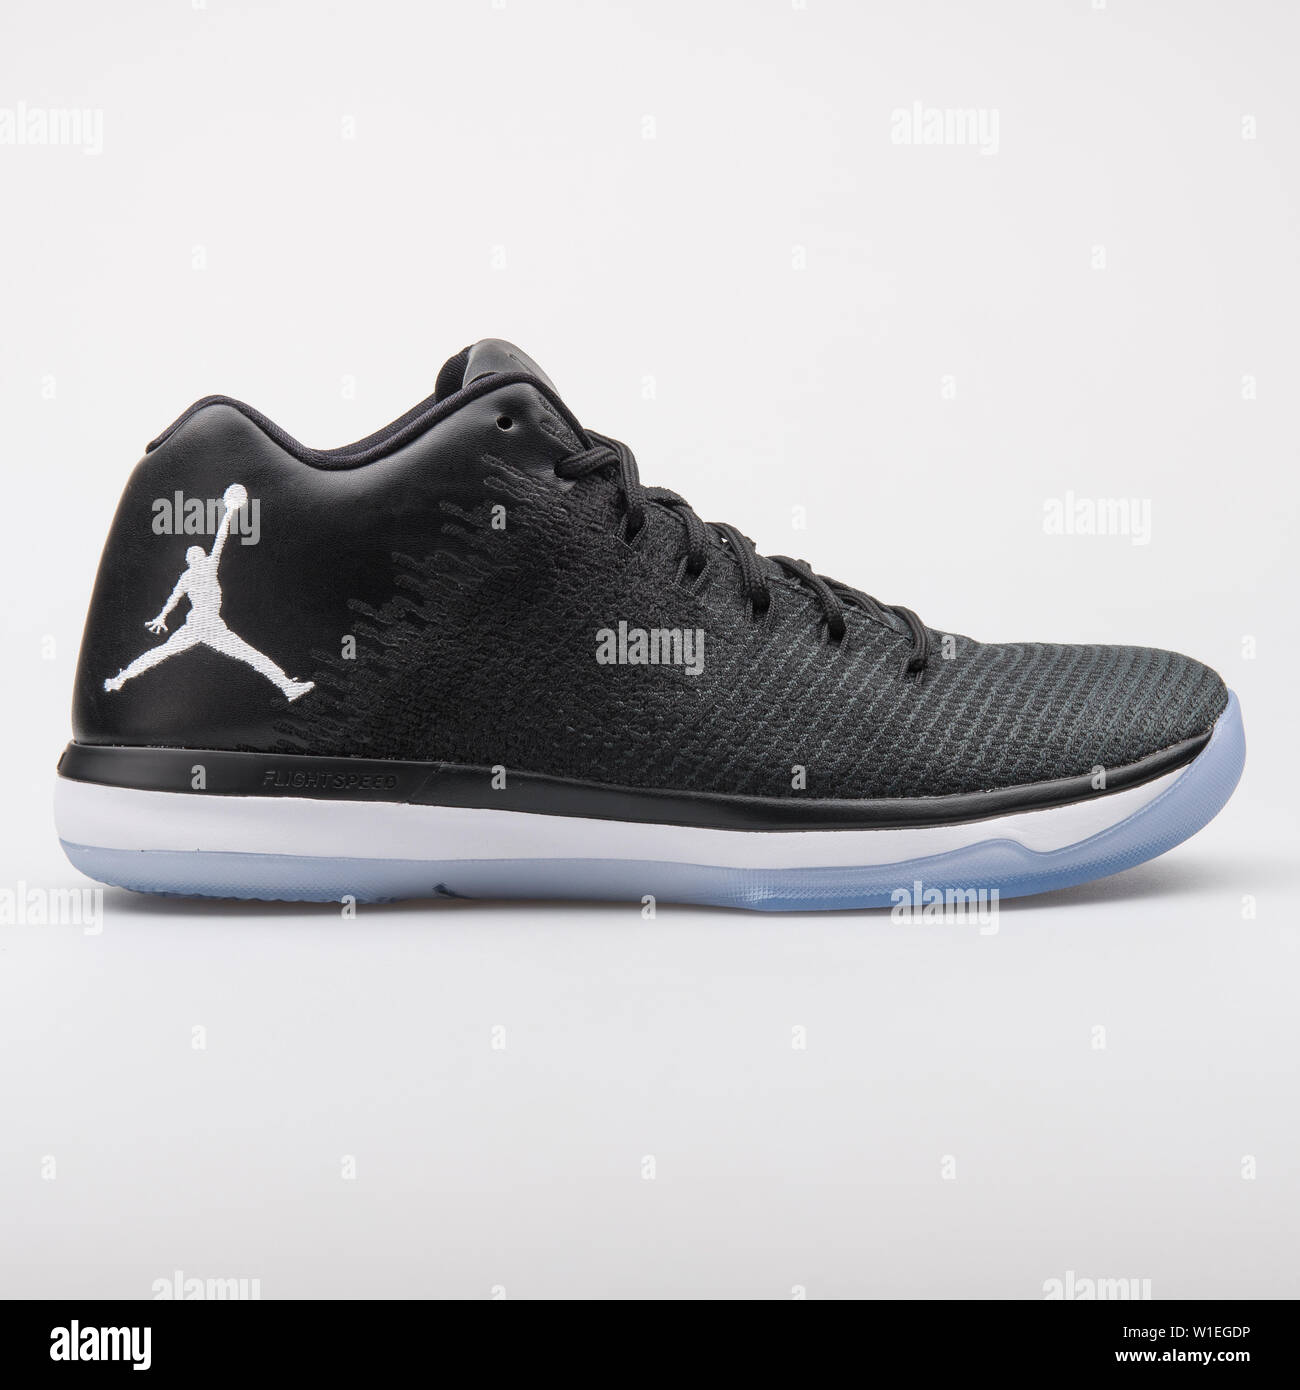 Pair of Blue White Nike Air Jordan Sneakers on a Black Background · Free  Stock Photo